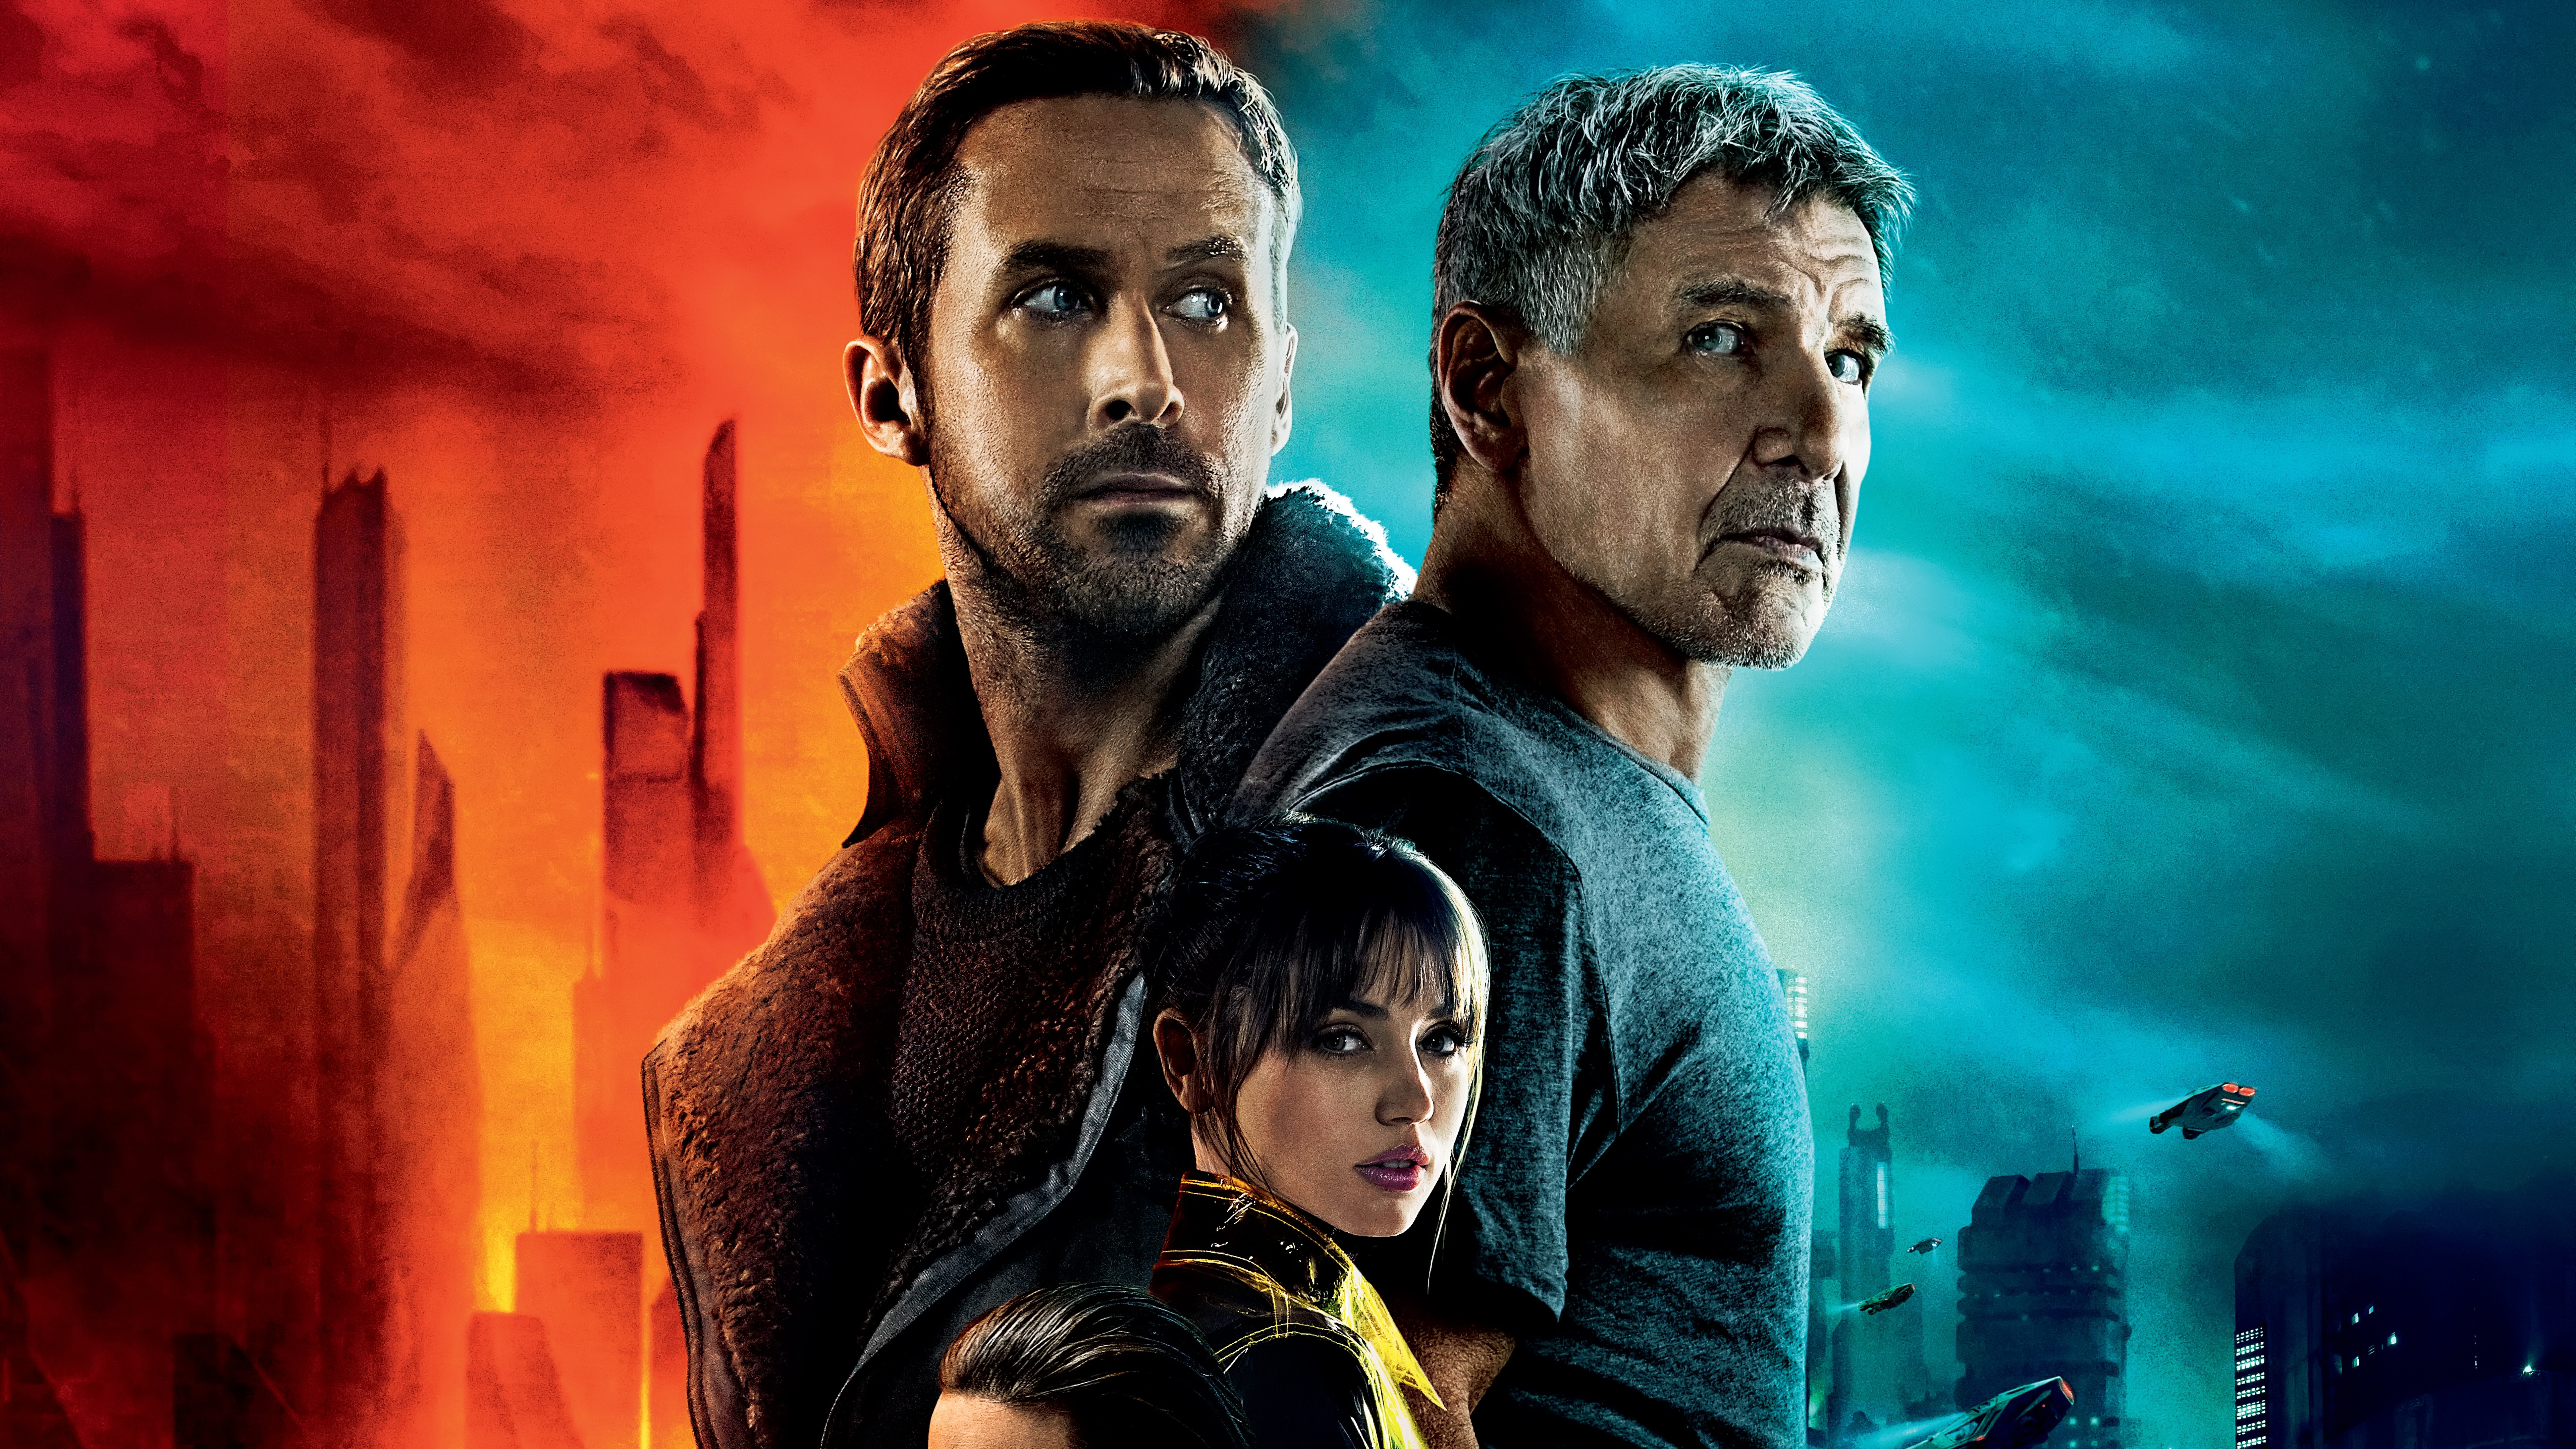 Ana De Armas Render Art  Blade Runner 2049 Movie 4K wallpaper download